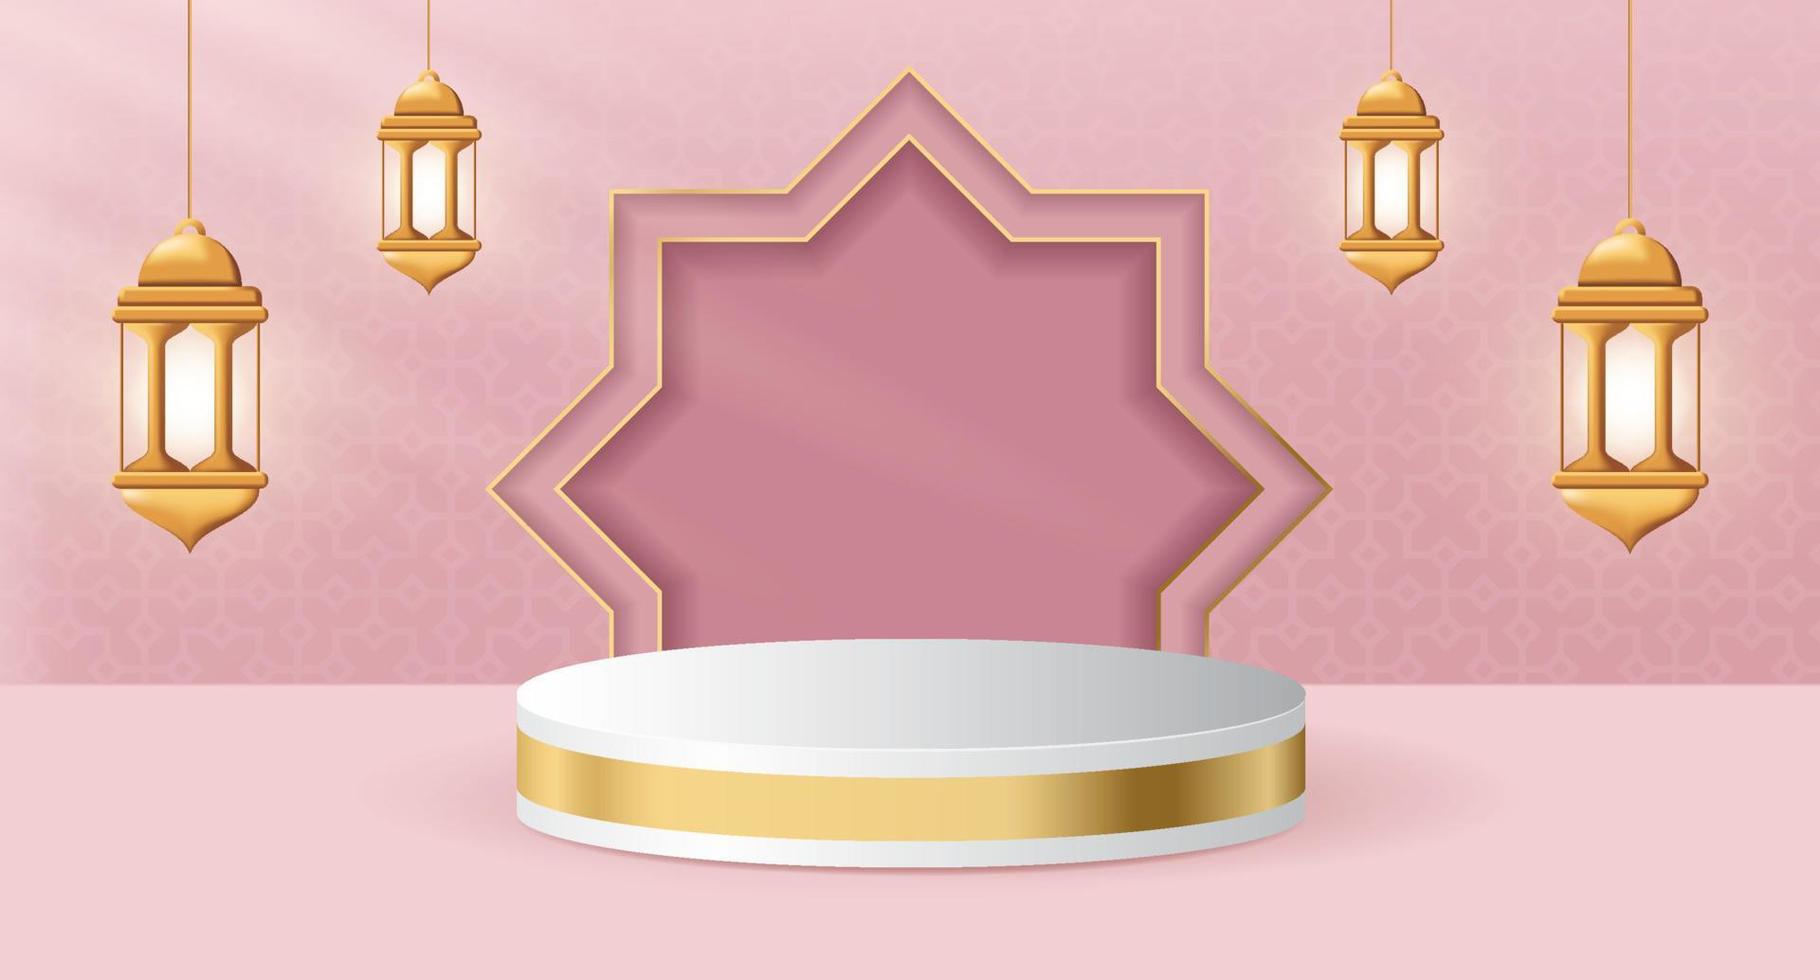 3d product display podium themed islamic with lantern for ramadan. Islamic 3d display podium decoration with realistic lantern. Vector illustration